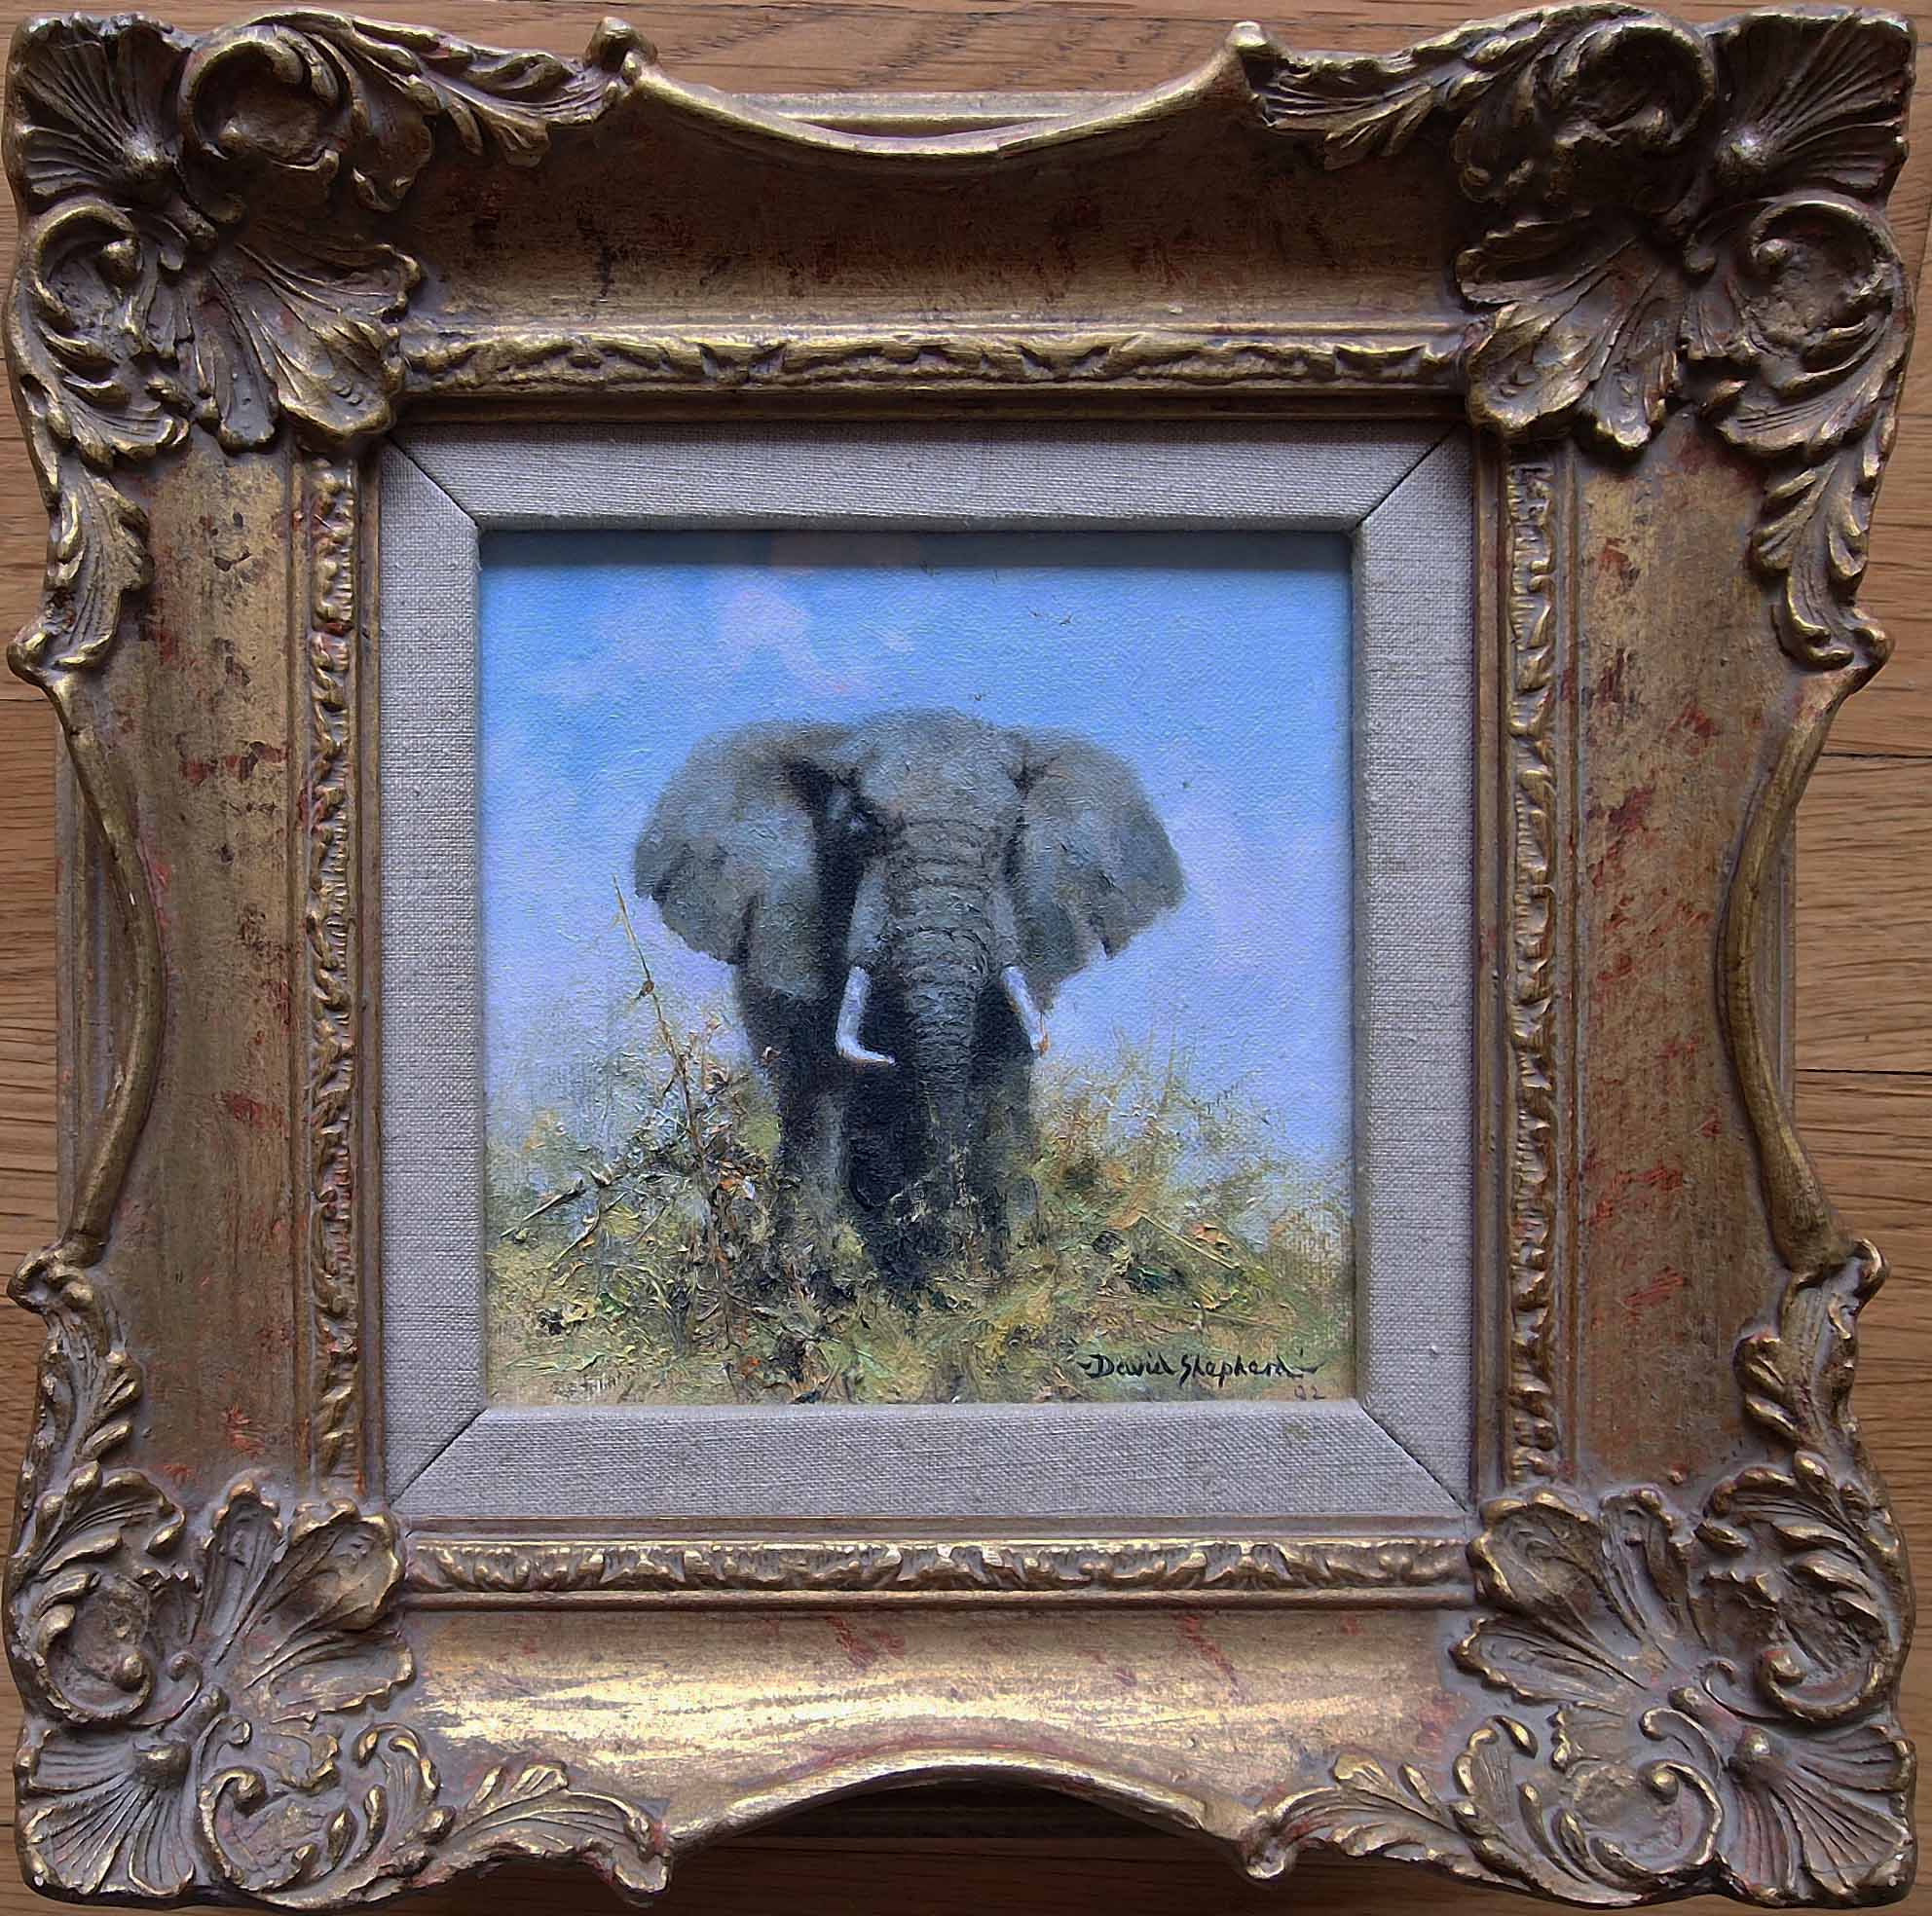 david shepherd, elephant, original oil painting on canvas,9